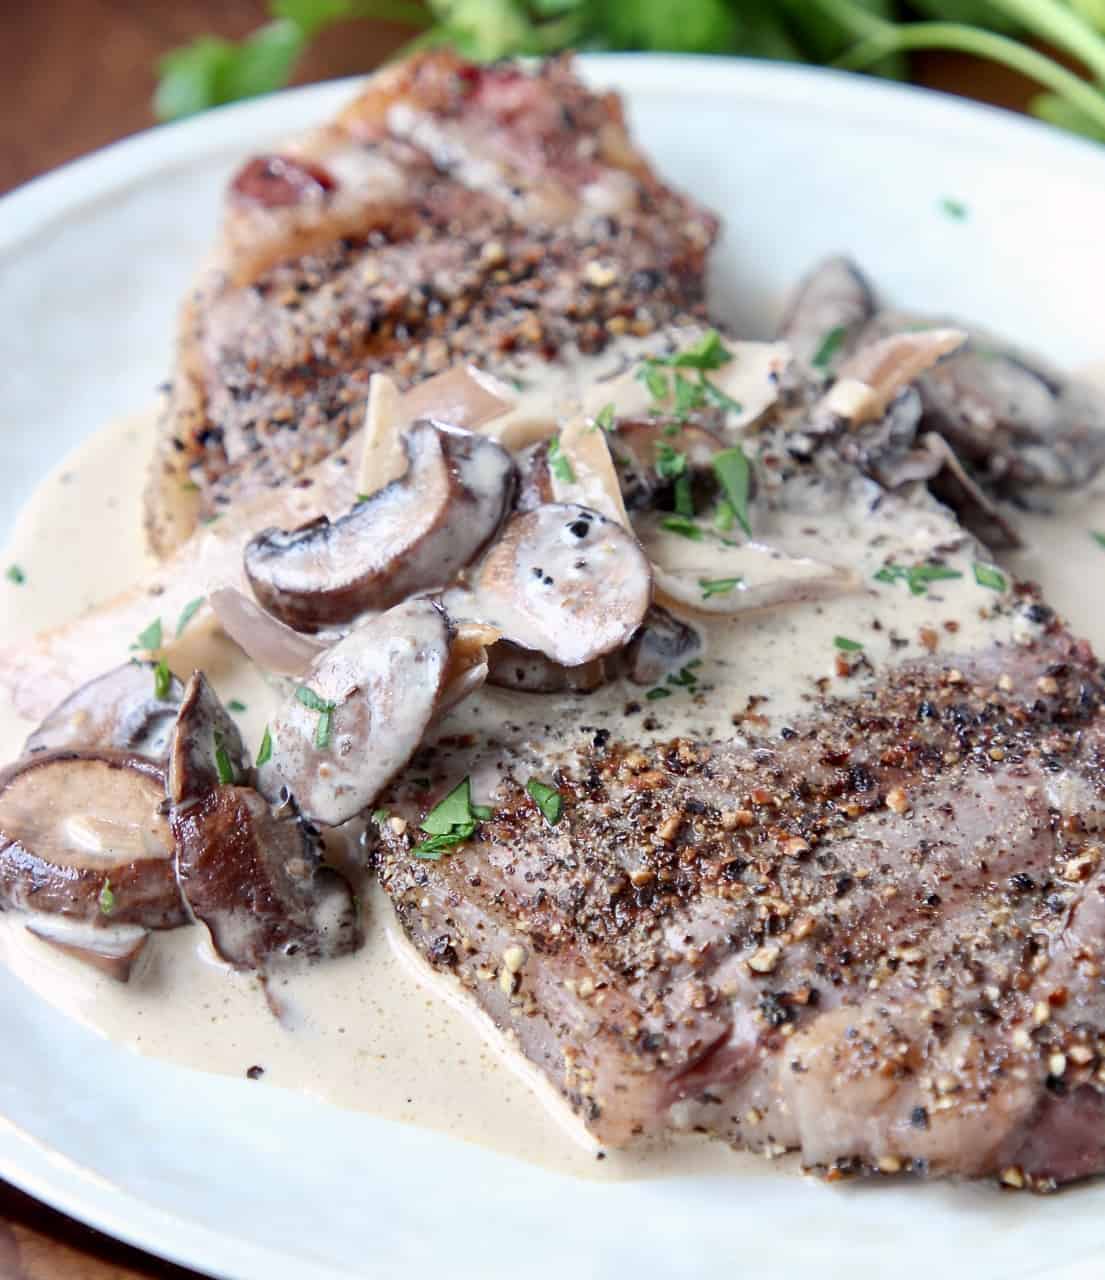 Peppercorn steak on plate, covered with mushroom sauce